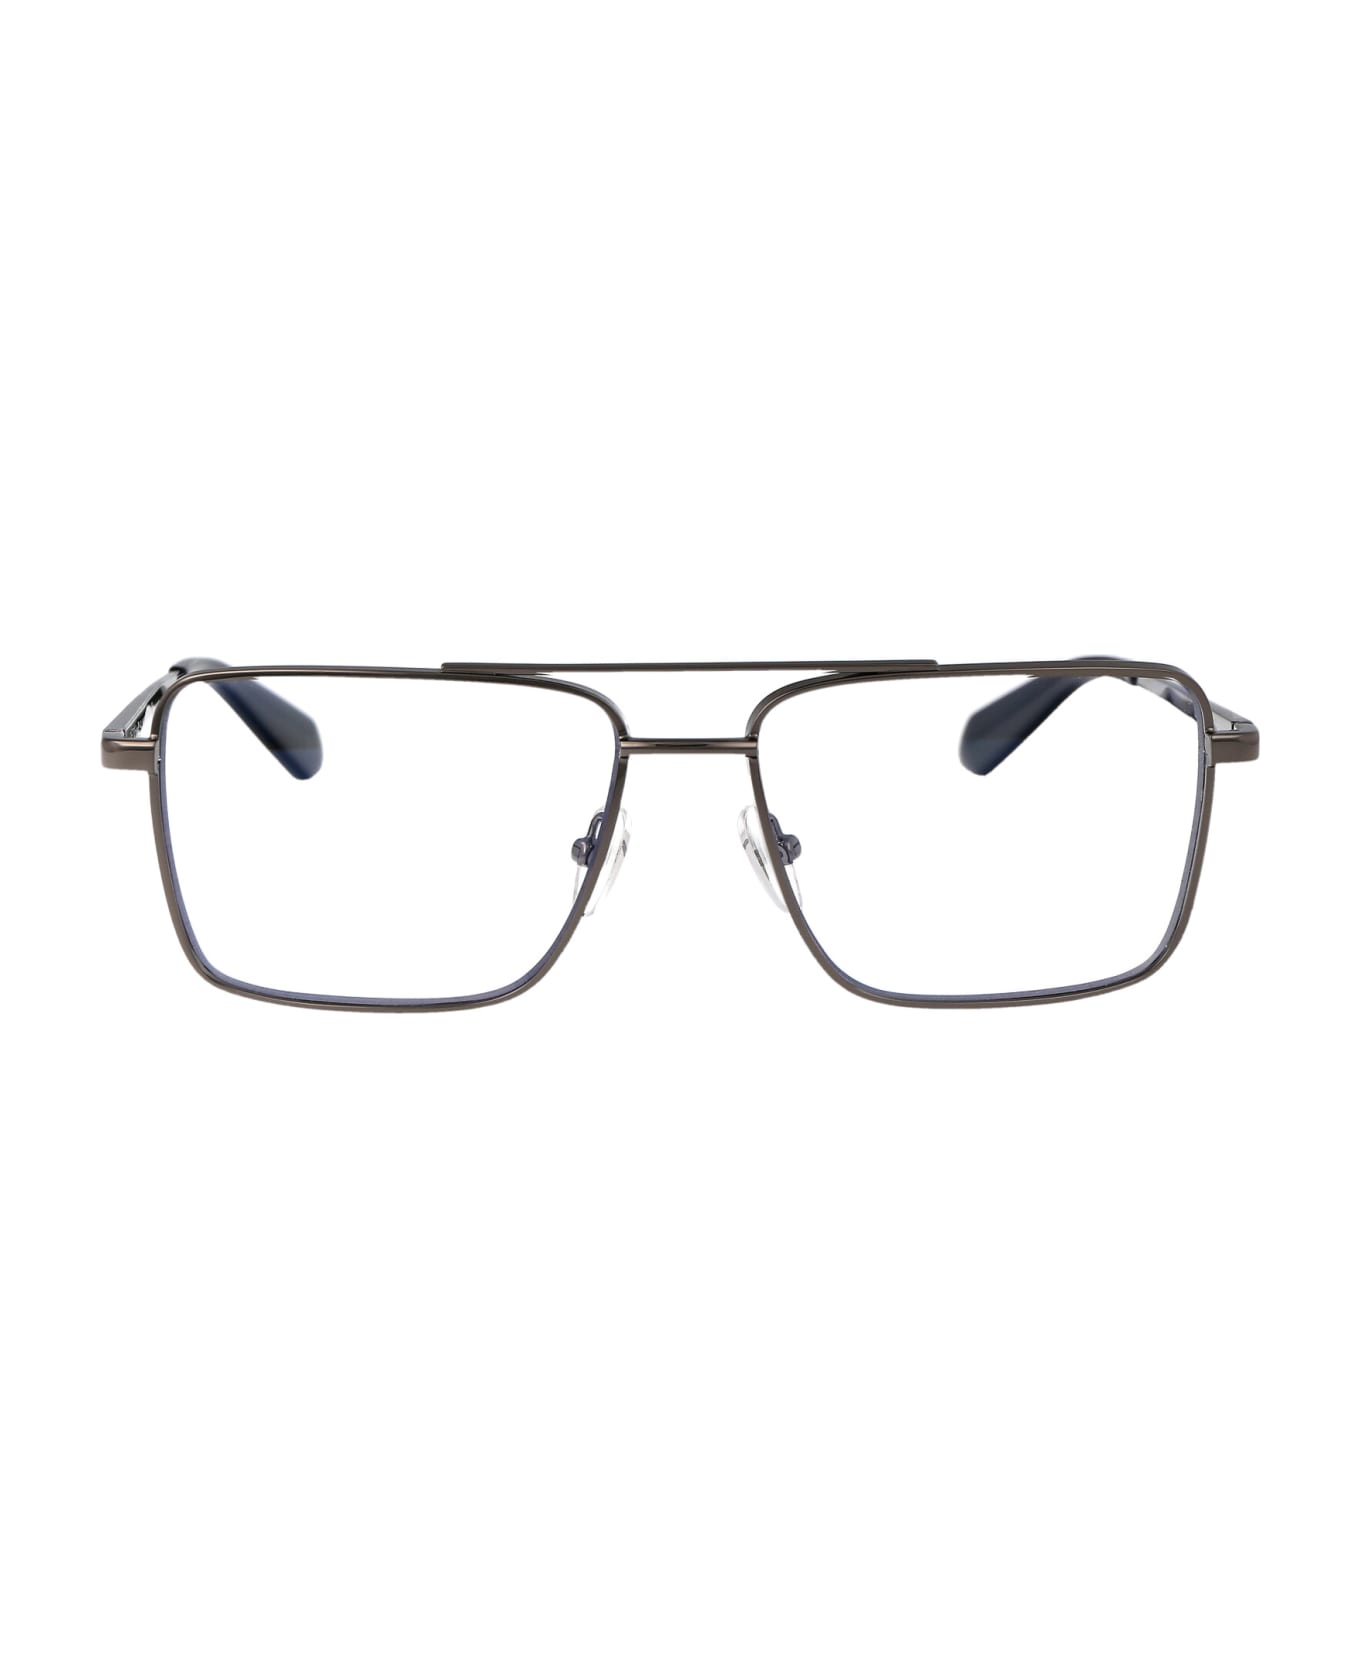 Off-White Optical Style 66 Glasses - 7700 GUNMETAL 